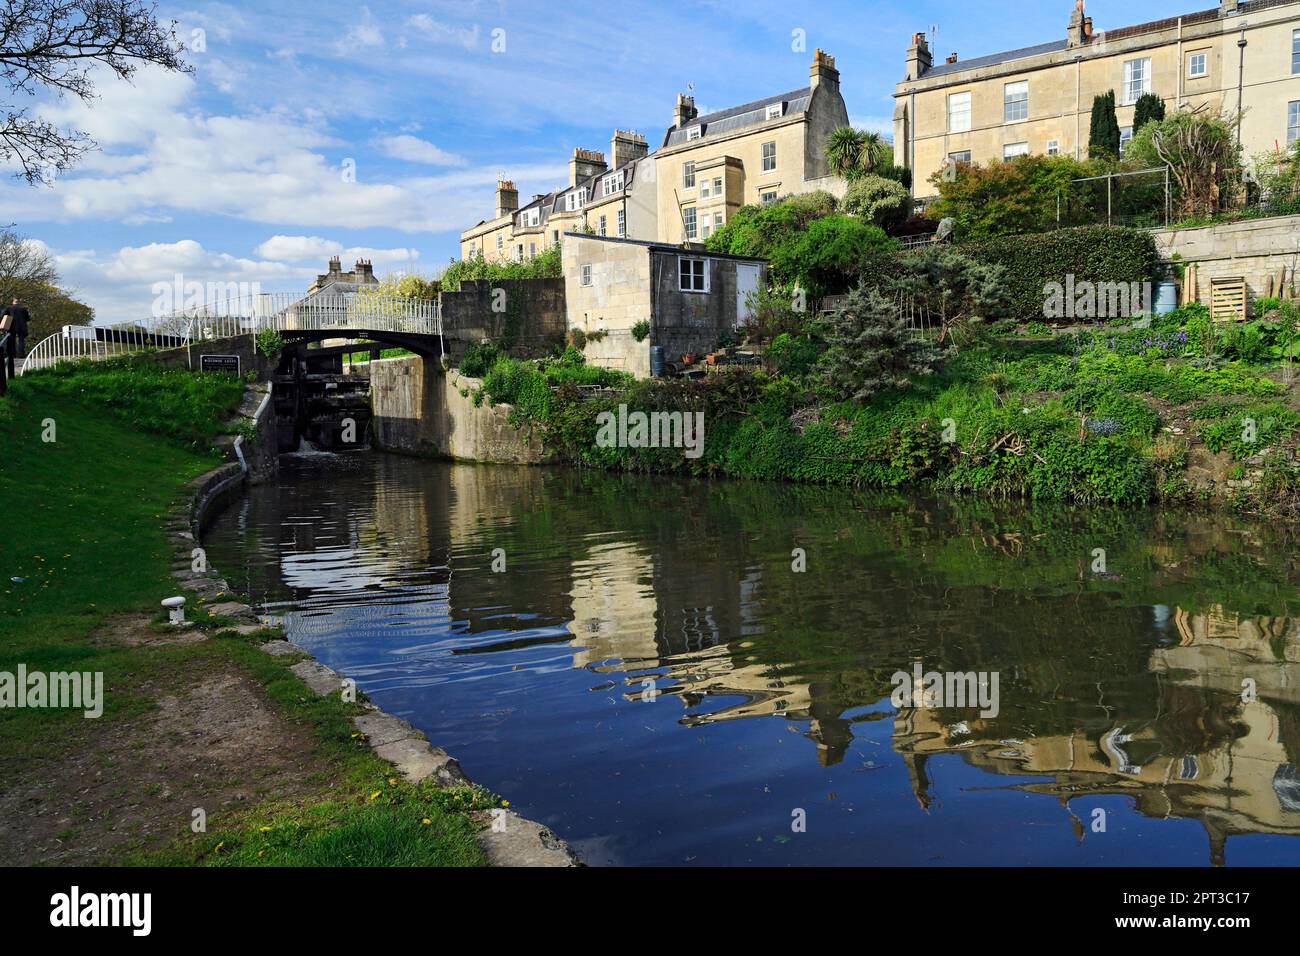 Bath Top Lock, Kennet and Avon Canal; Widcombe, Bath, Somerset, England, UK. Stock Photo